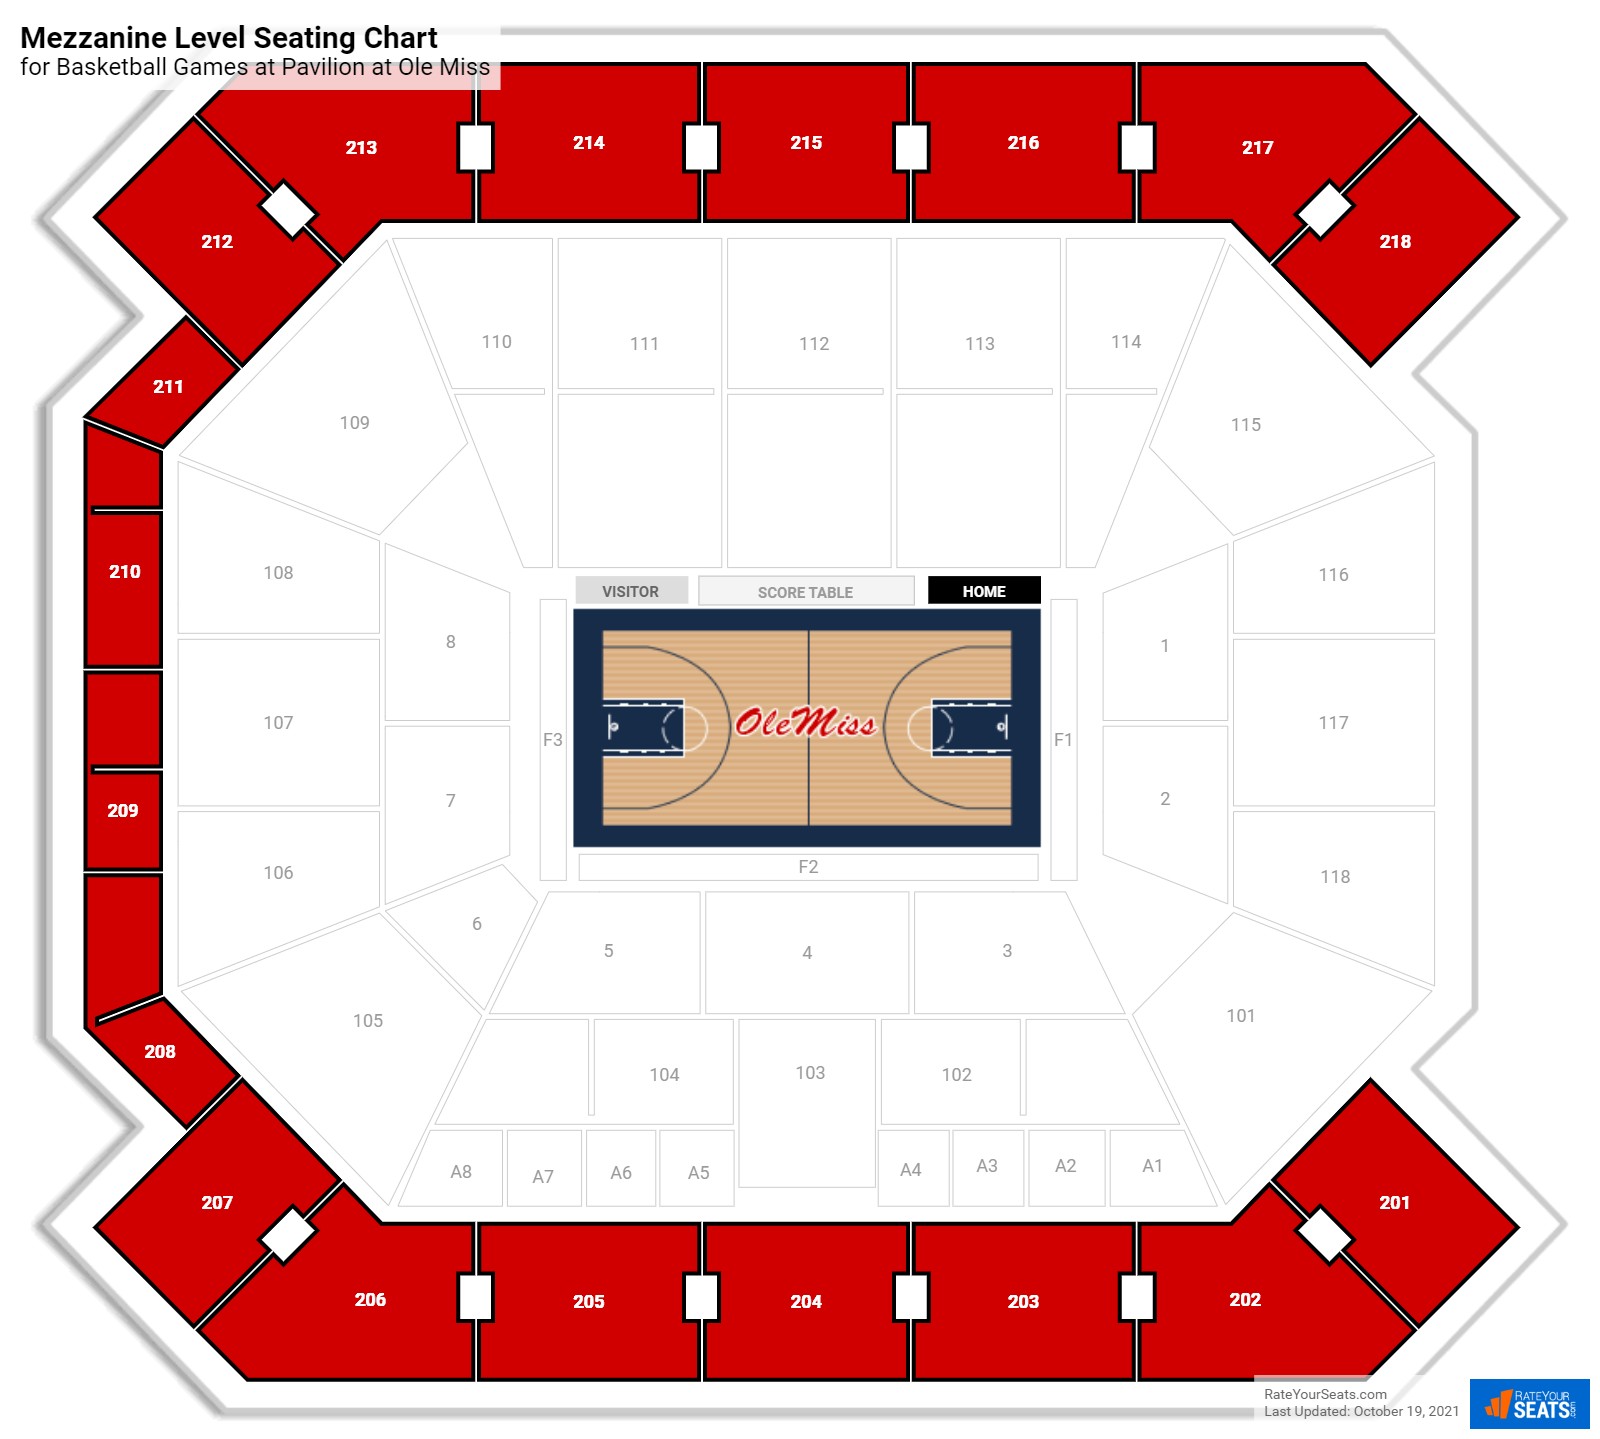 Basketball Mezzanine Level Seating Chart at Pavilion at Ole Miss